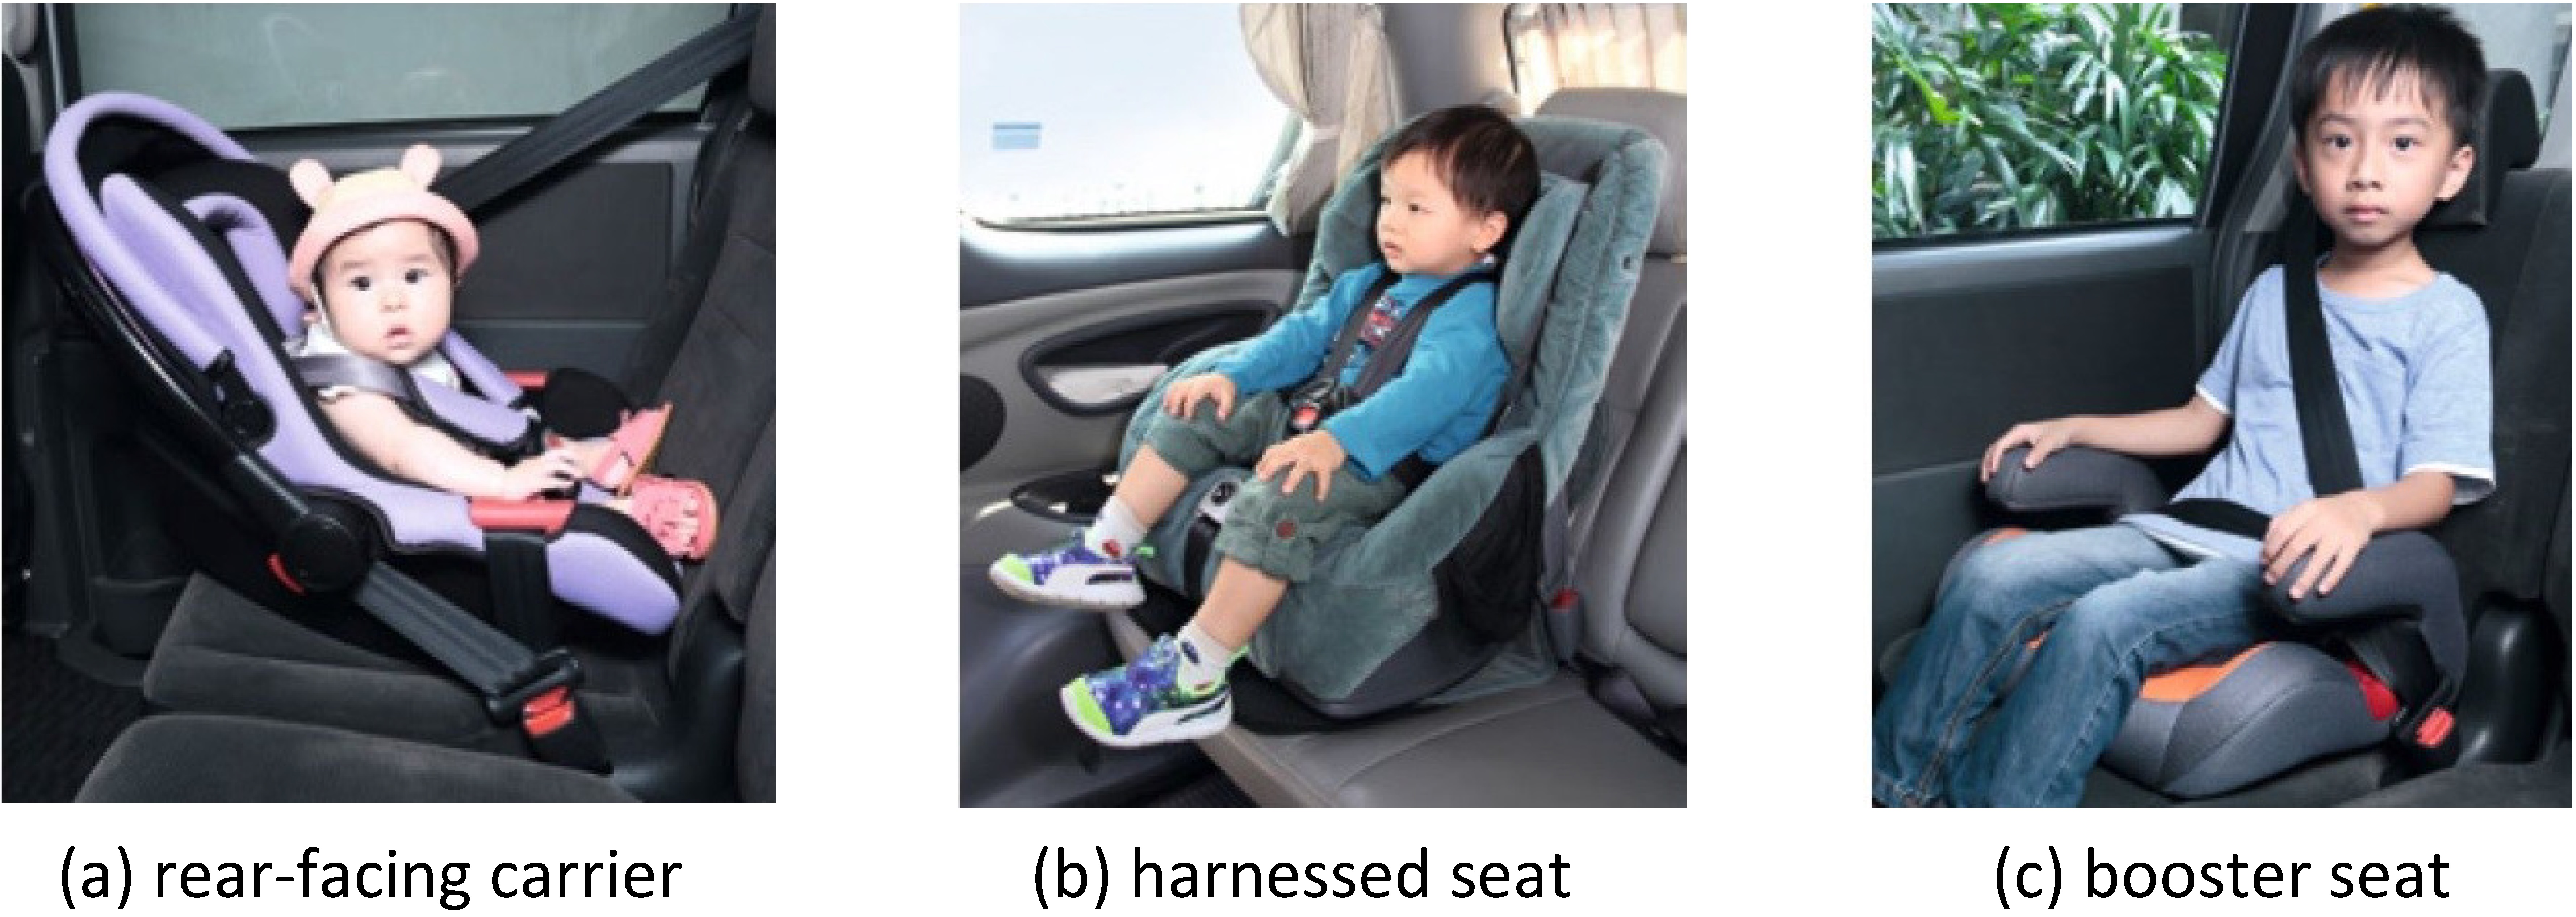 Figure 1 - Three major types of child car seats